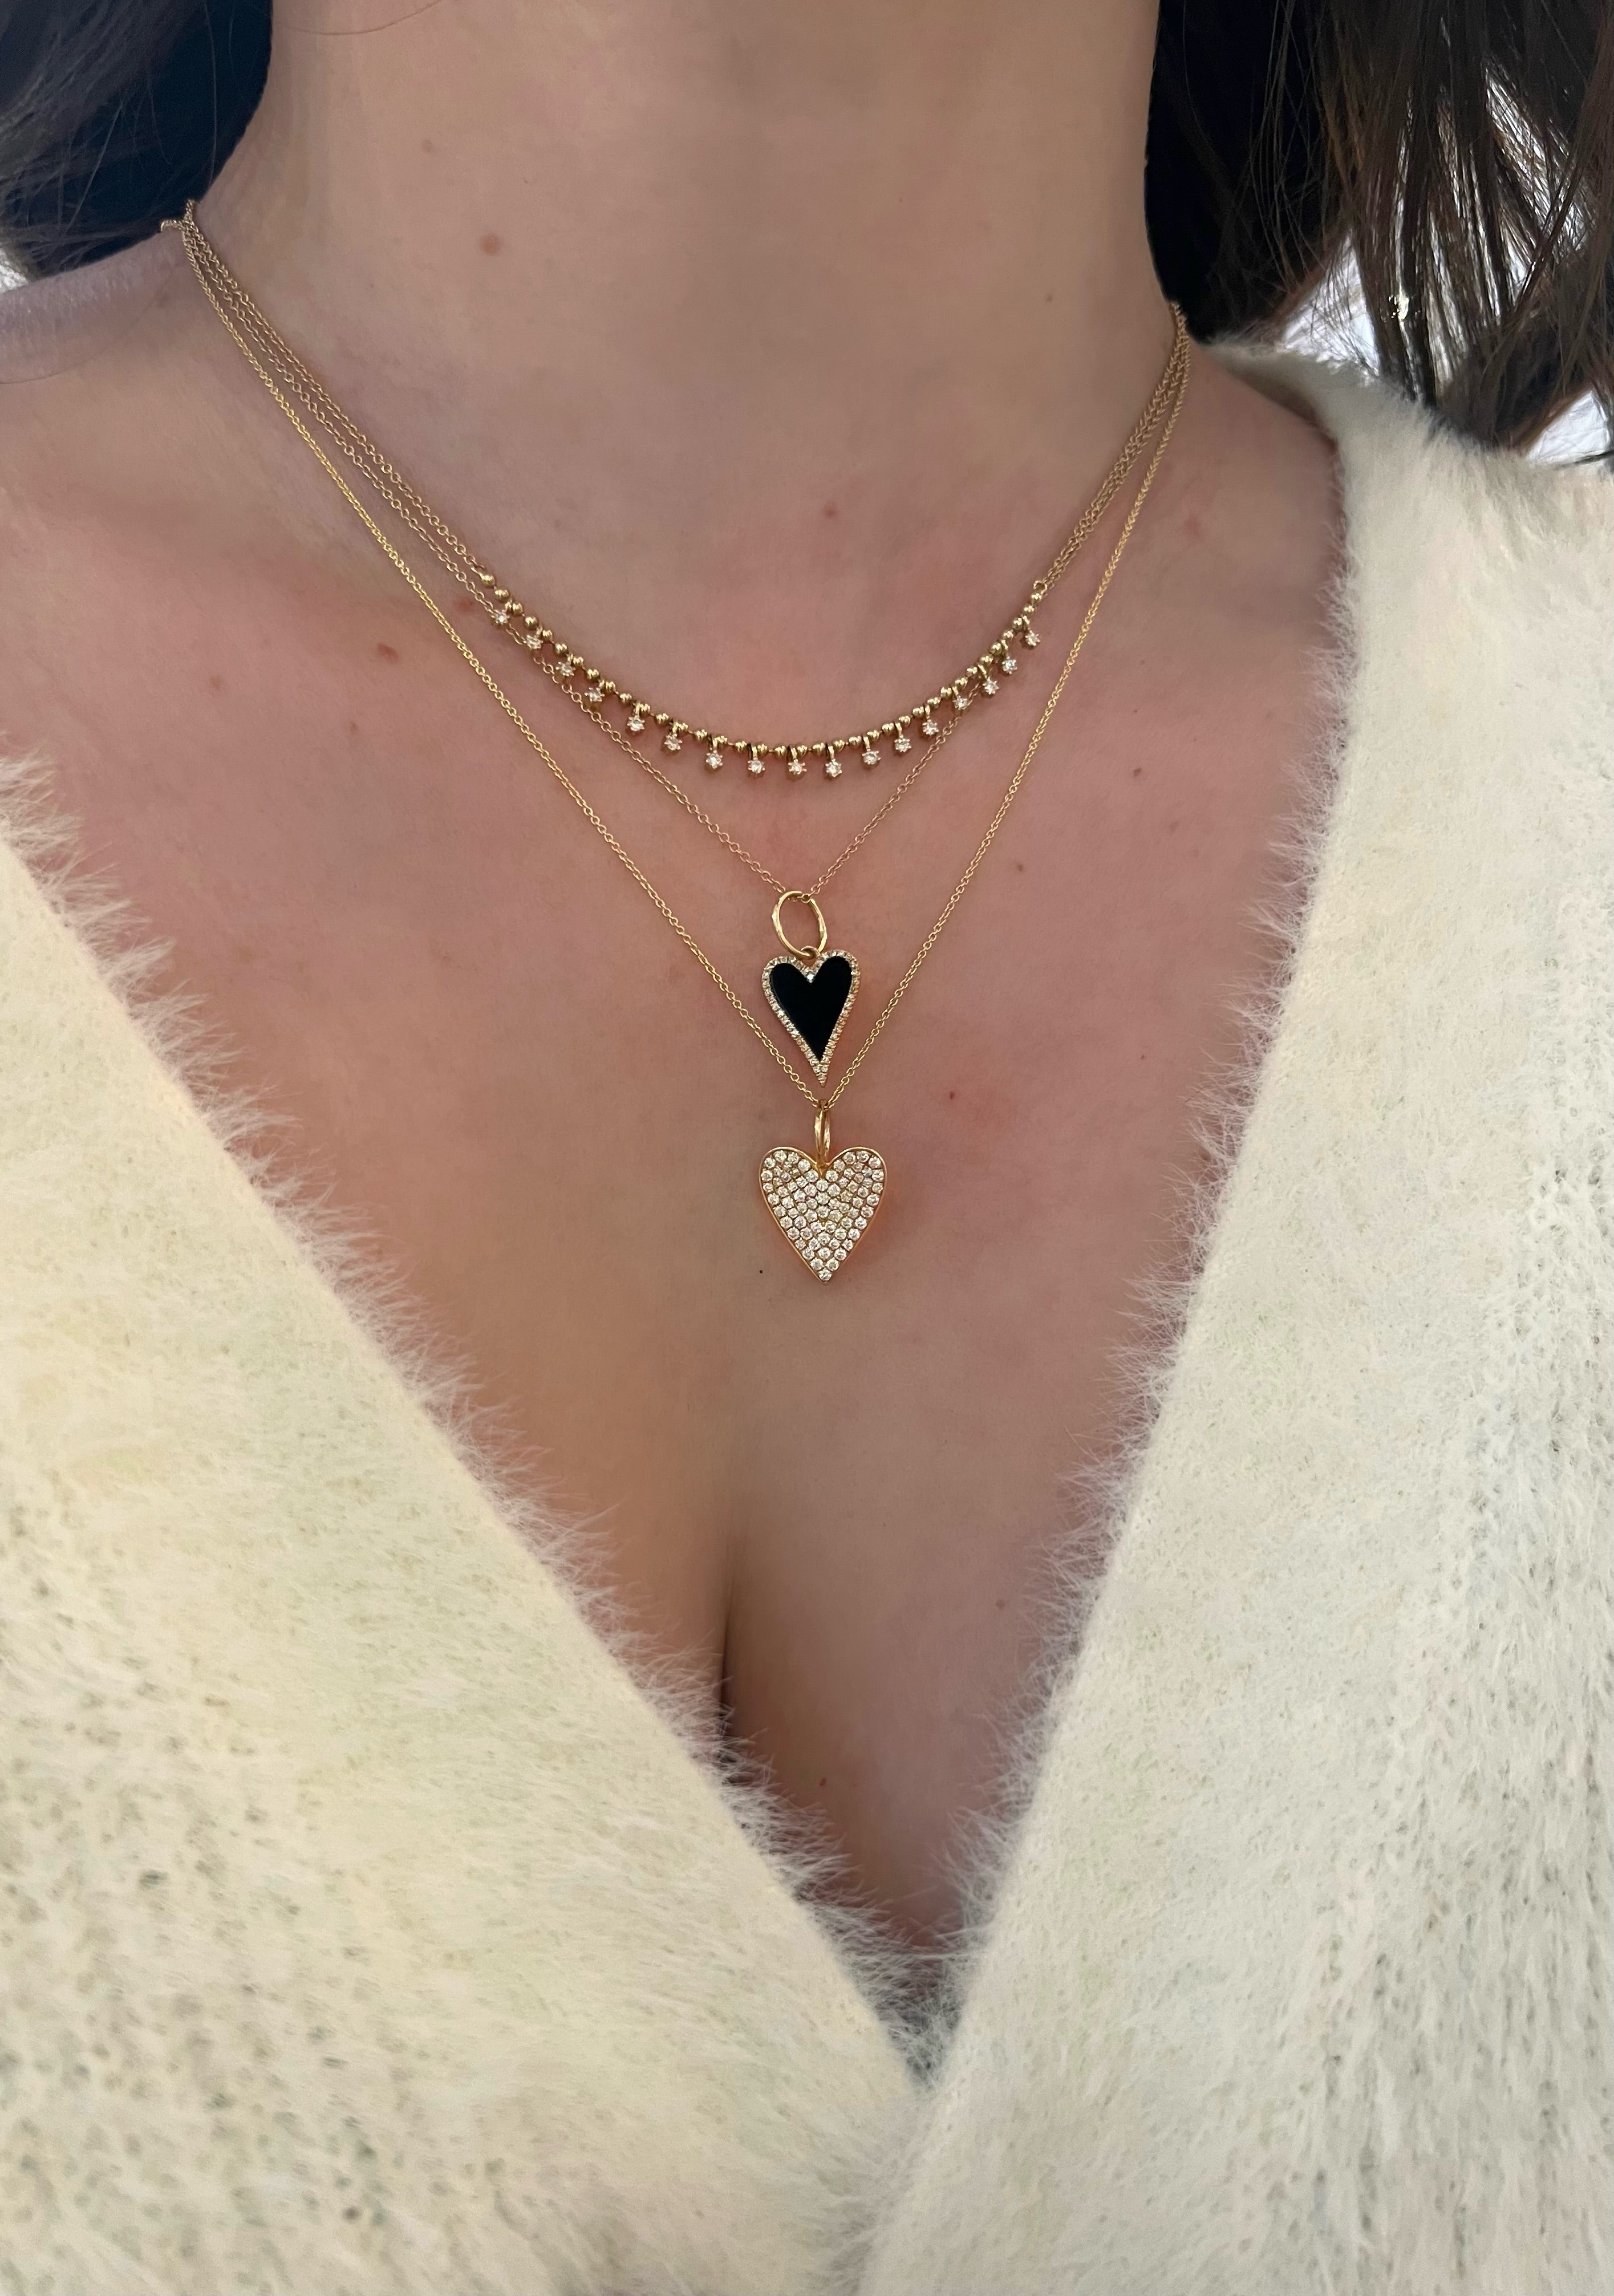 WD1288 14kt Gold Heart Shape Onyx with Diamond Halo Pendant